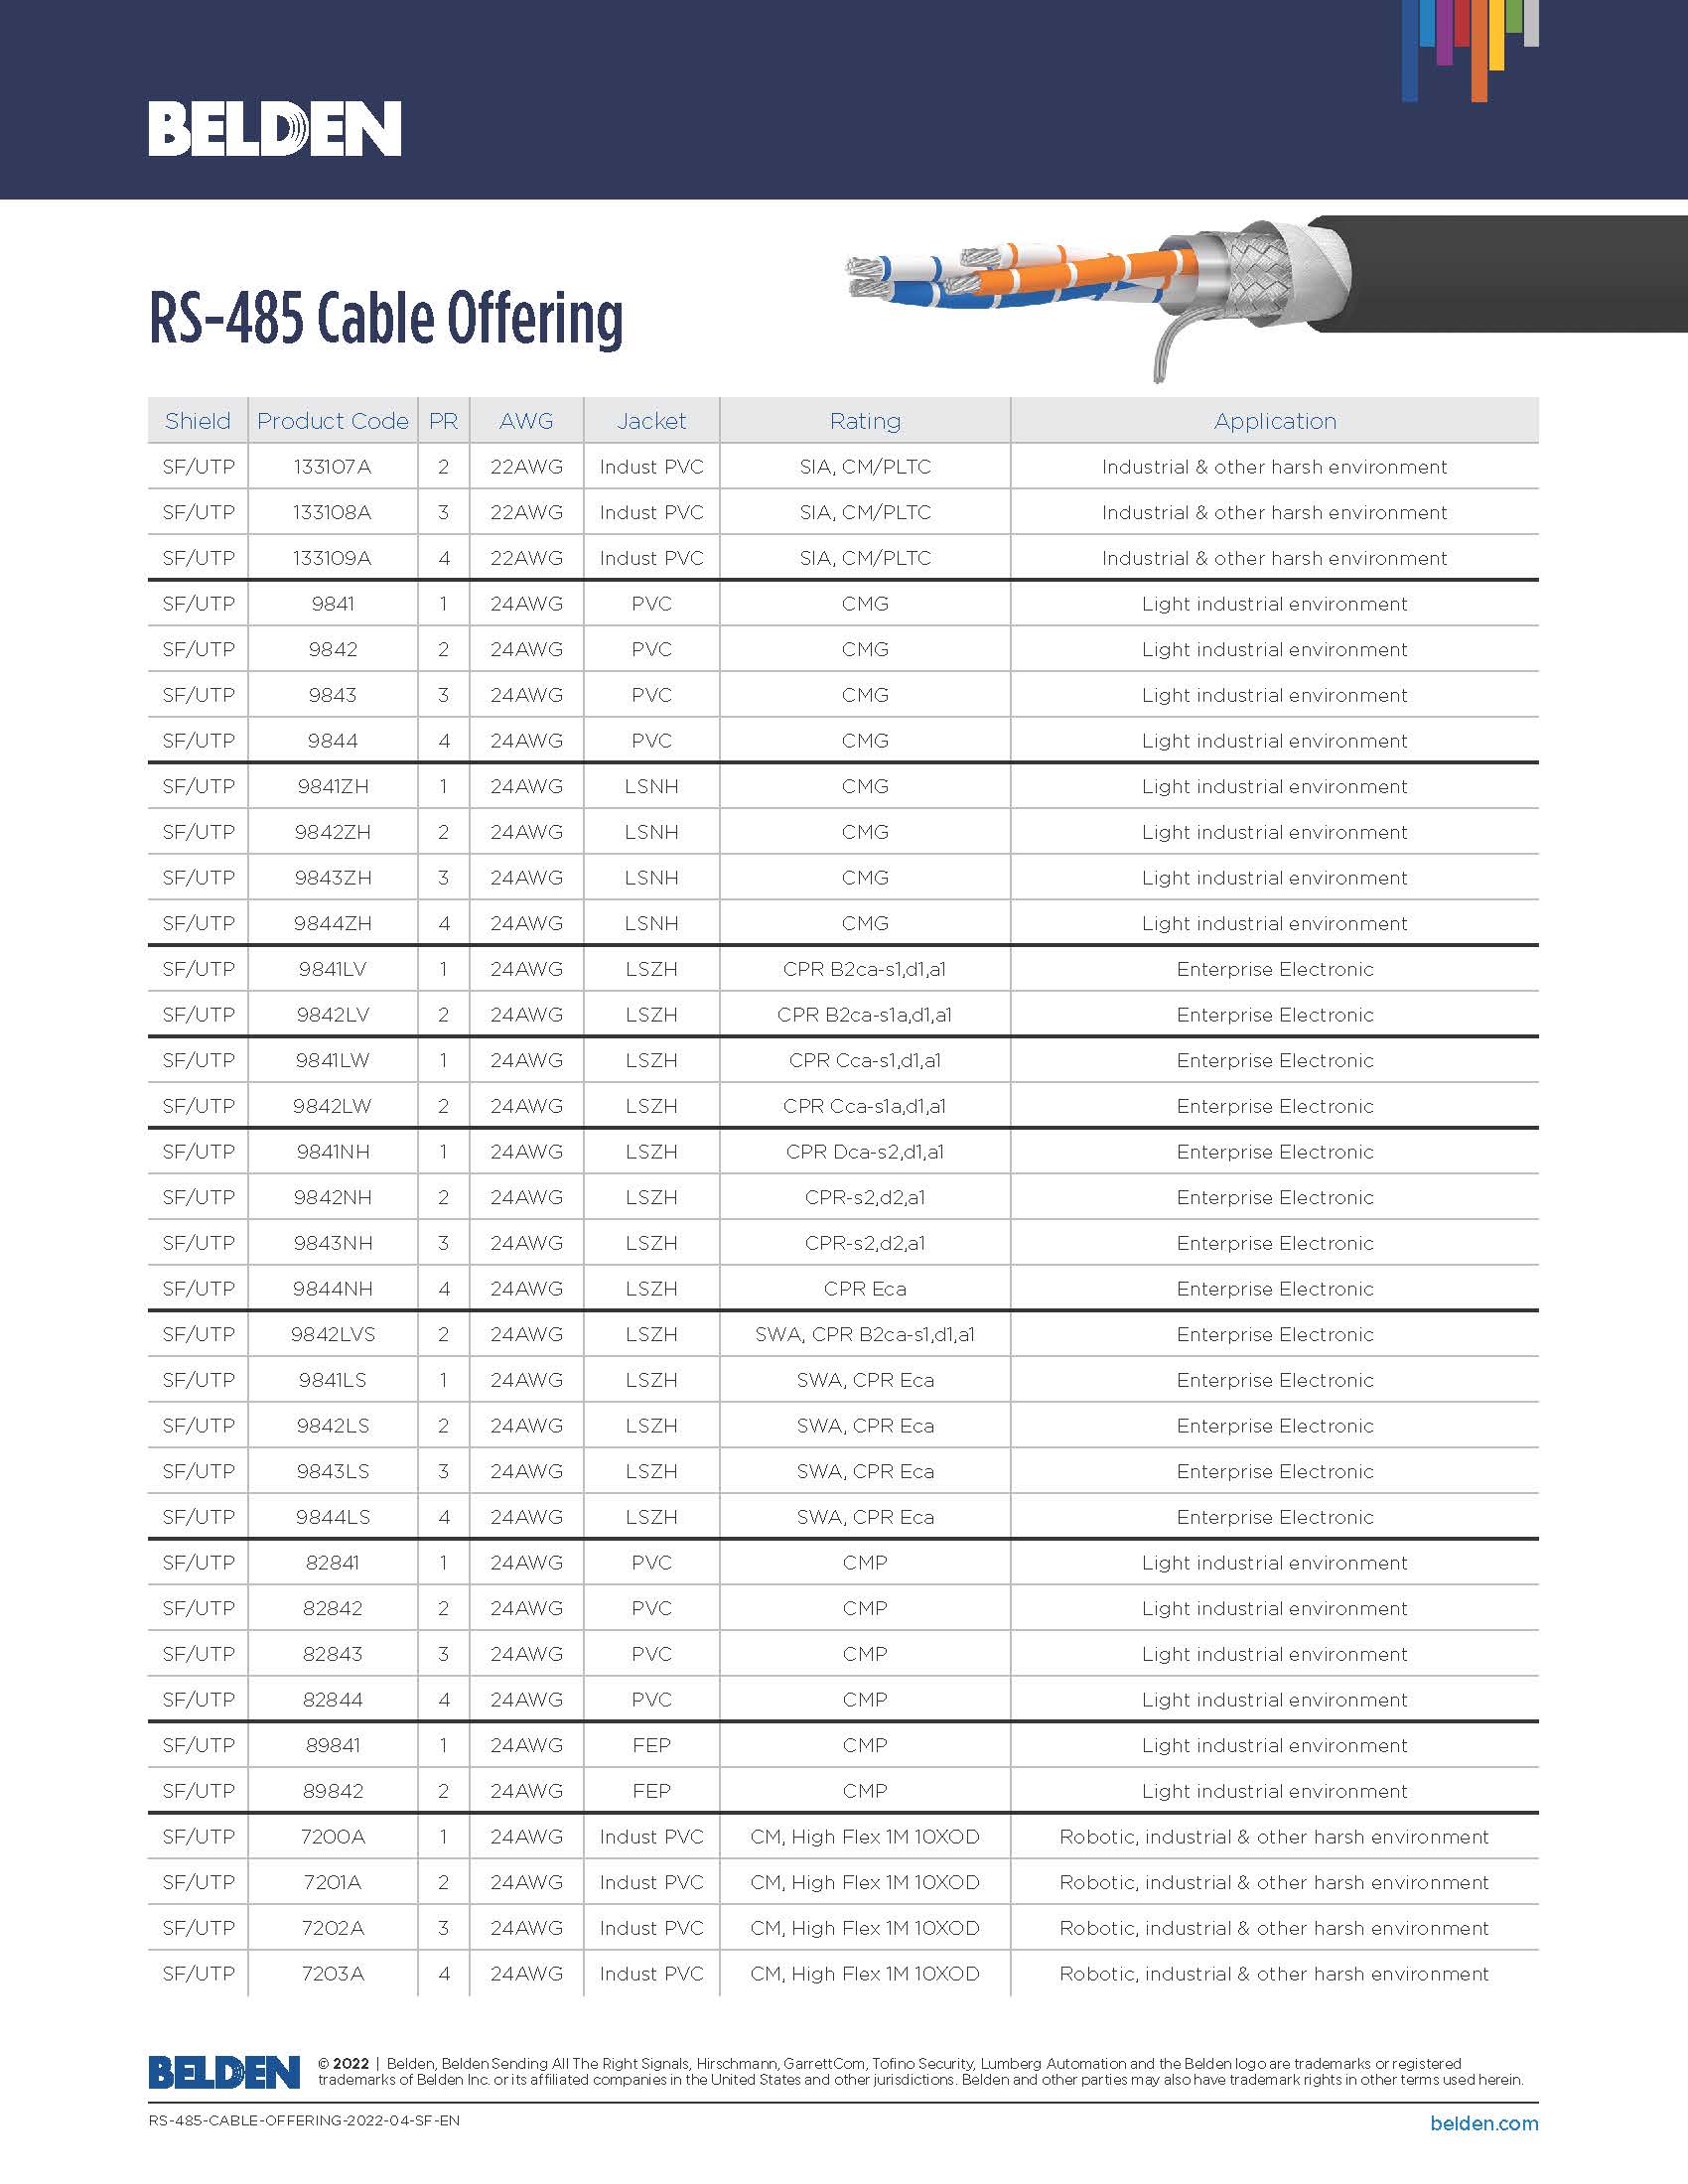 BELDEN RS-485 Cable 자료 2